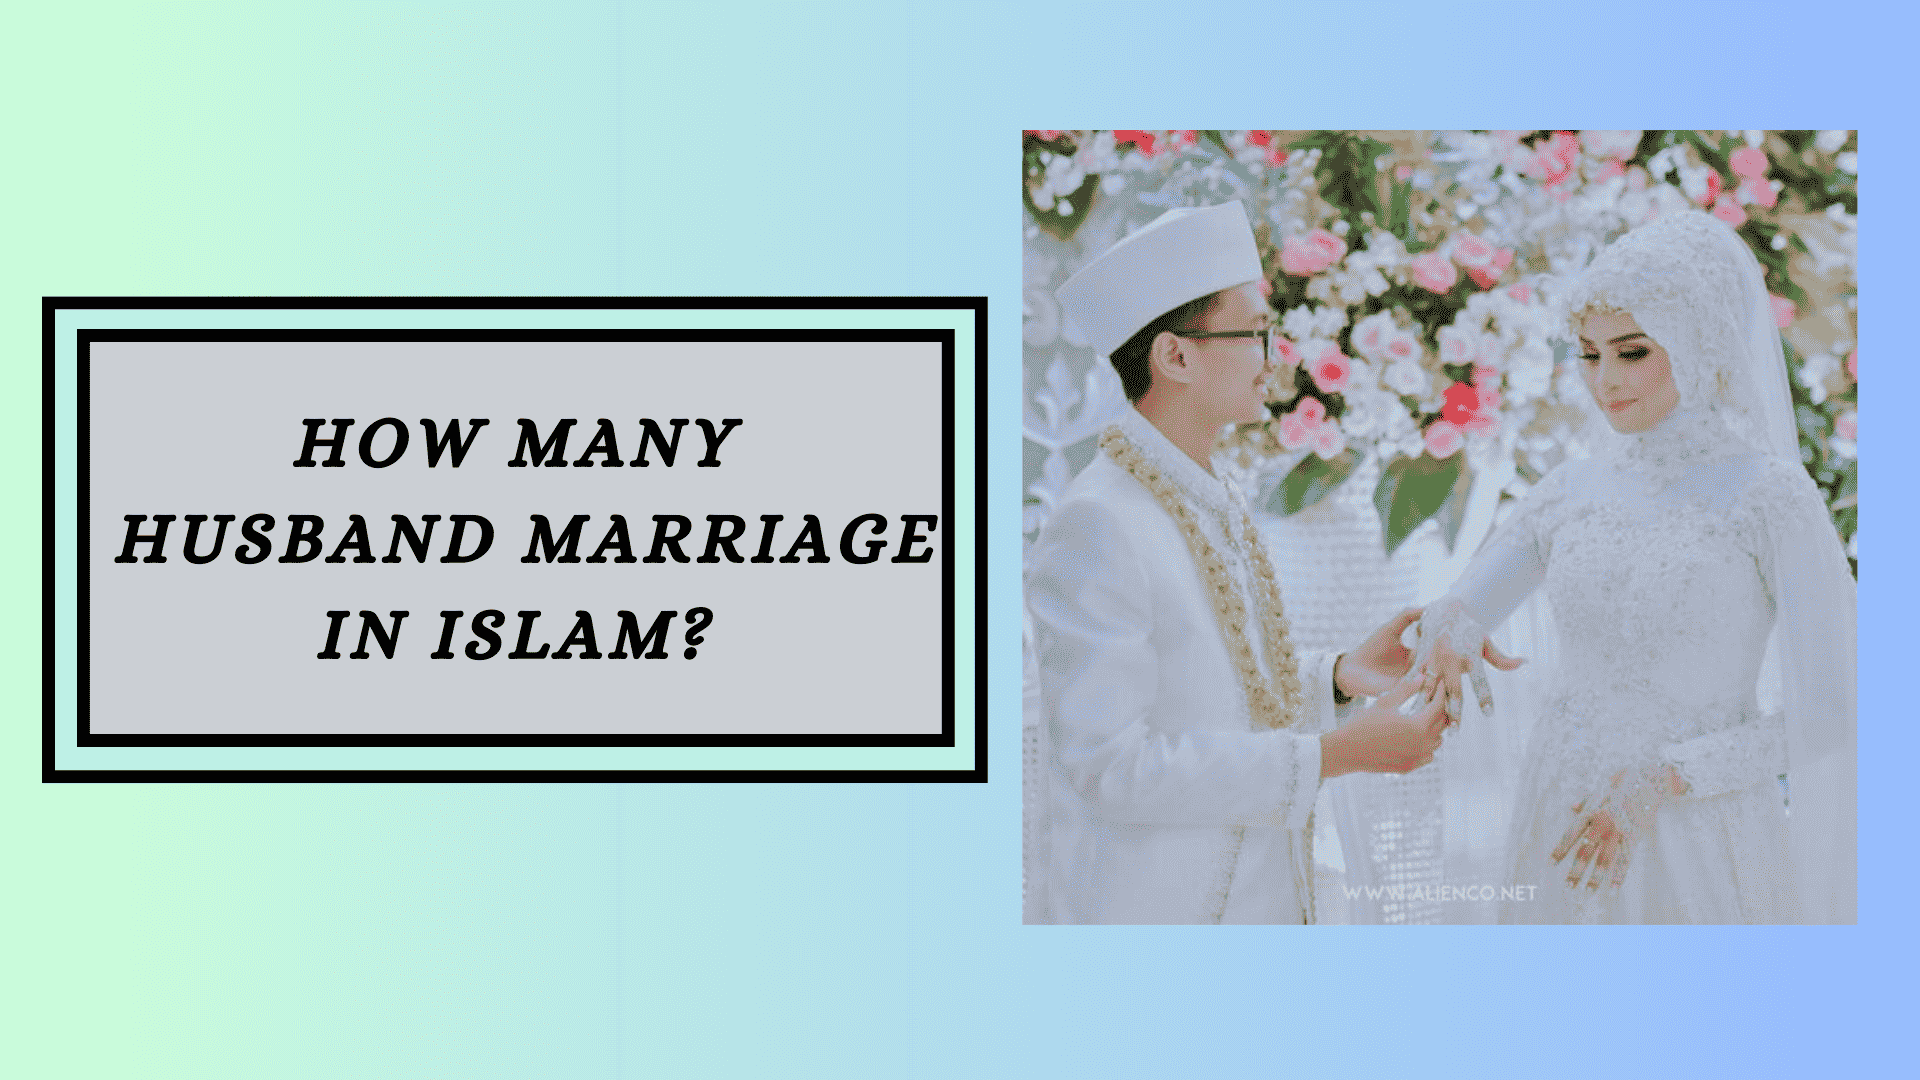 How many husband marriage in islam?